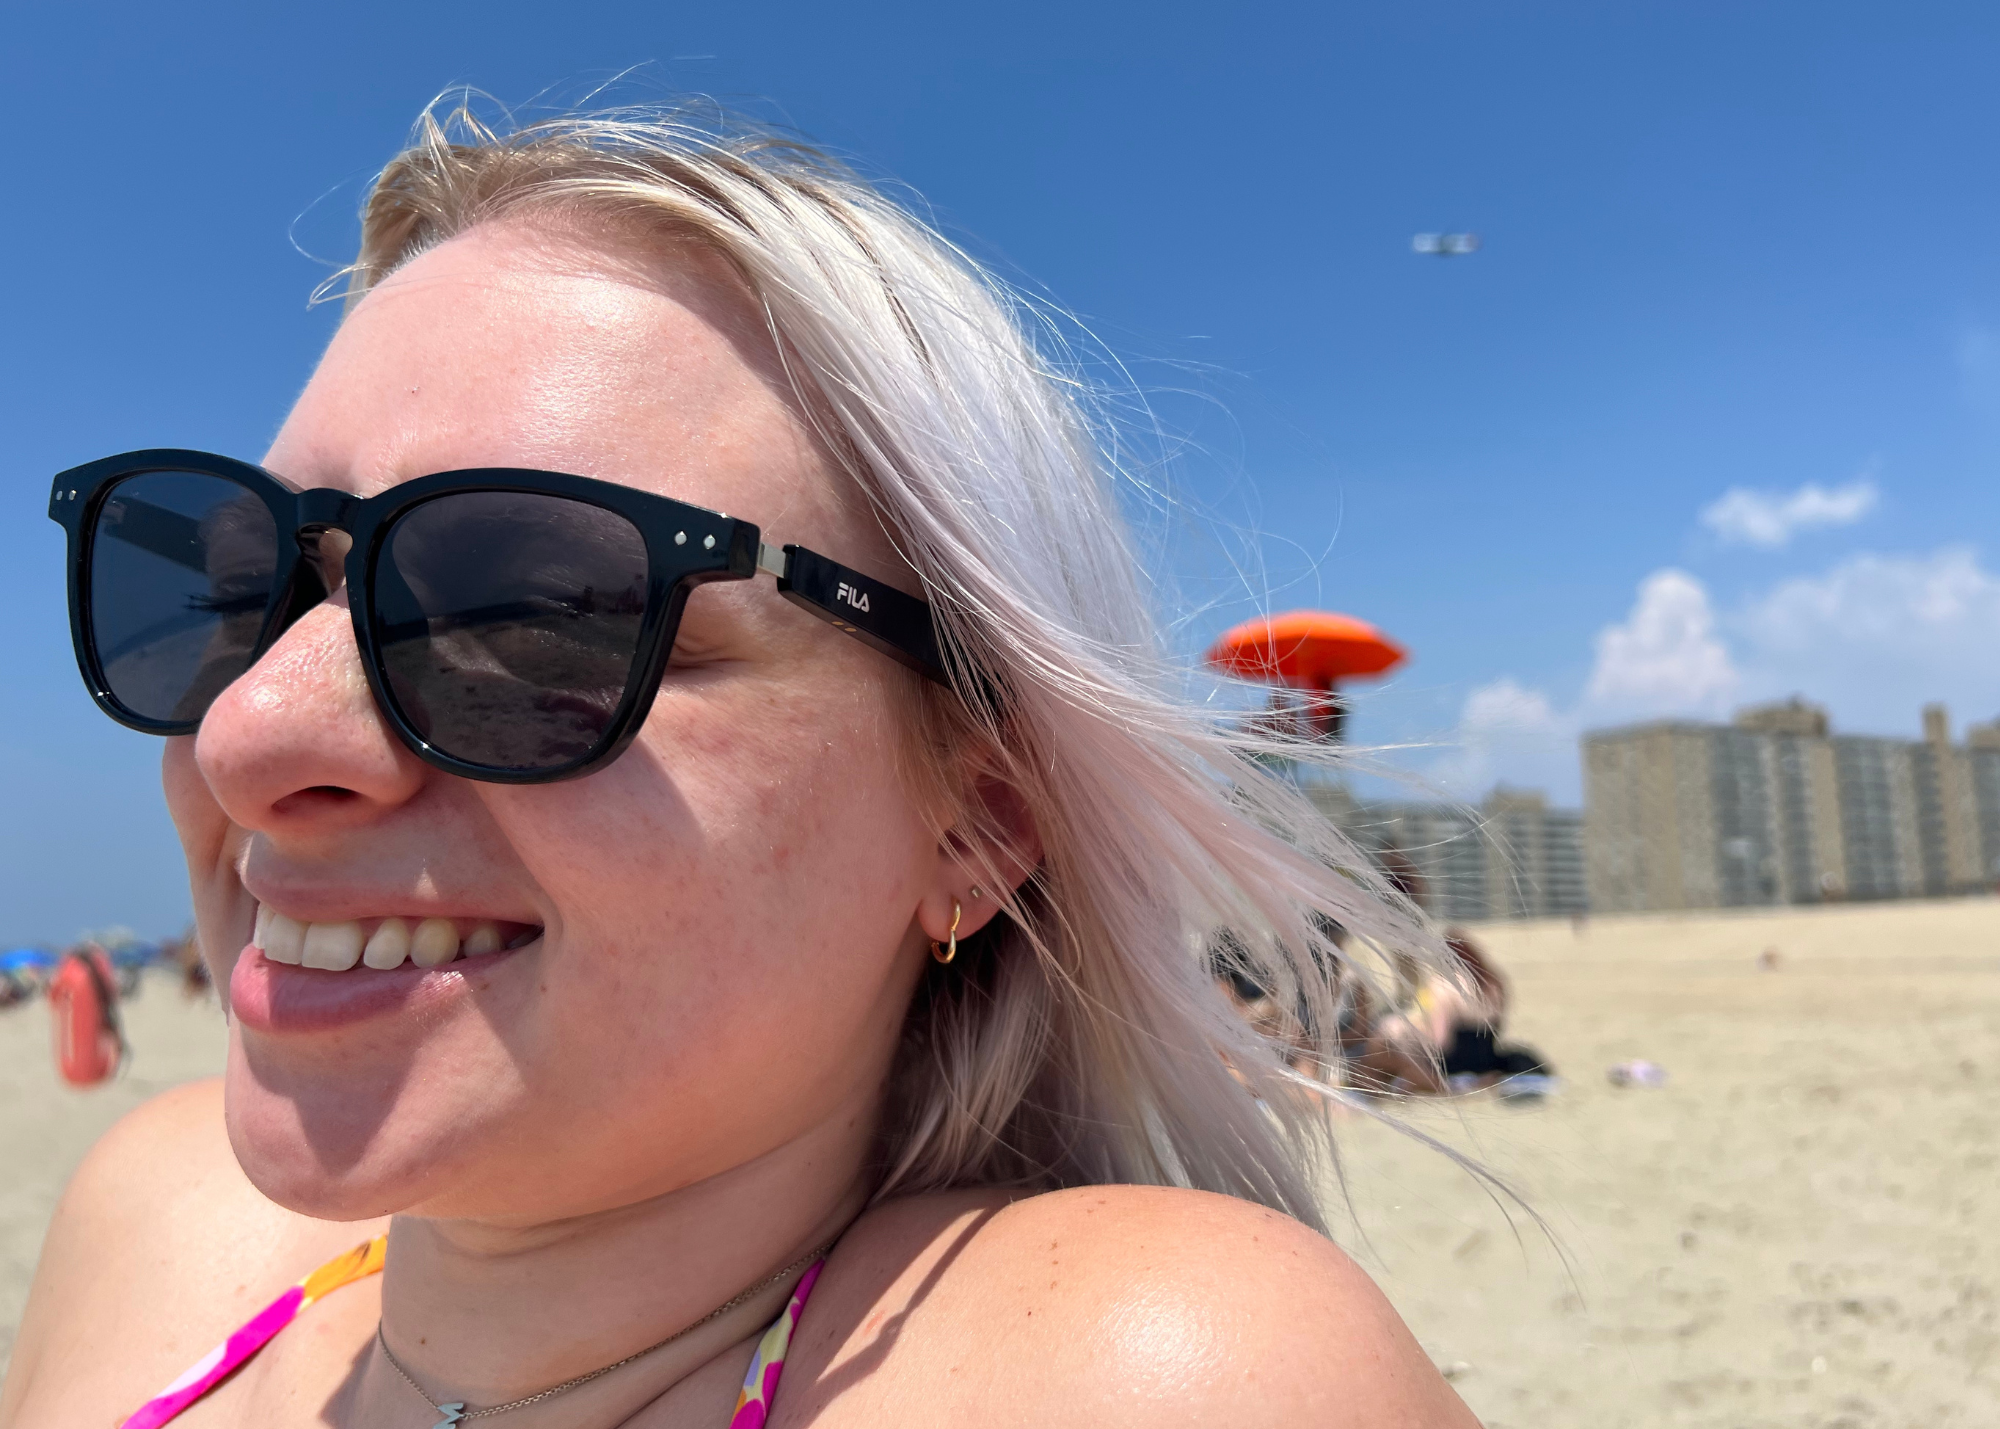 plajda siyah fila güneş gözlüğü takan kadın